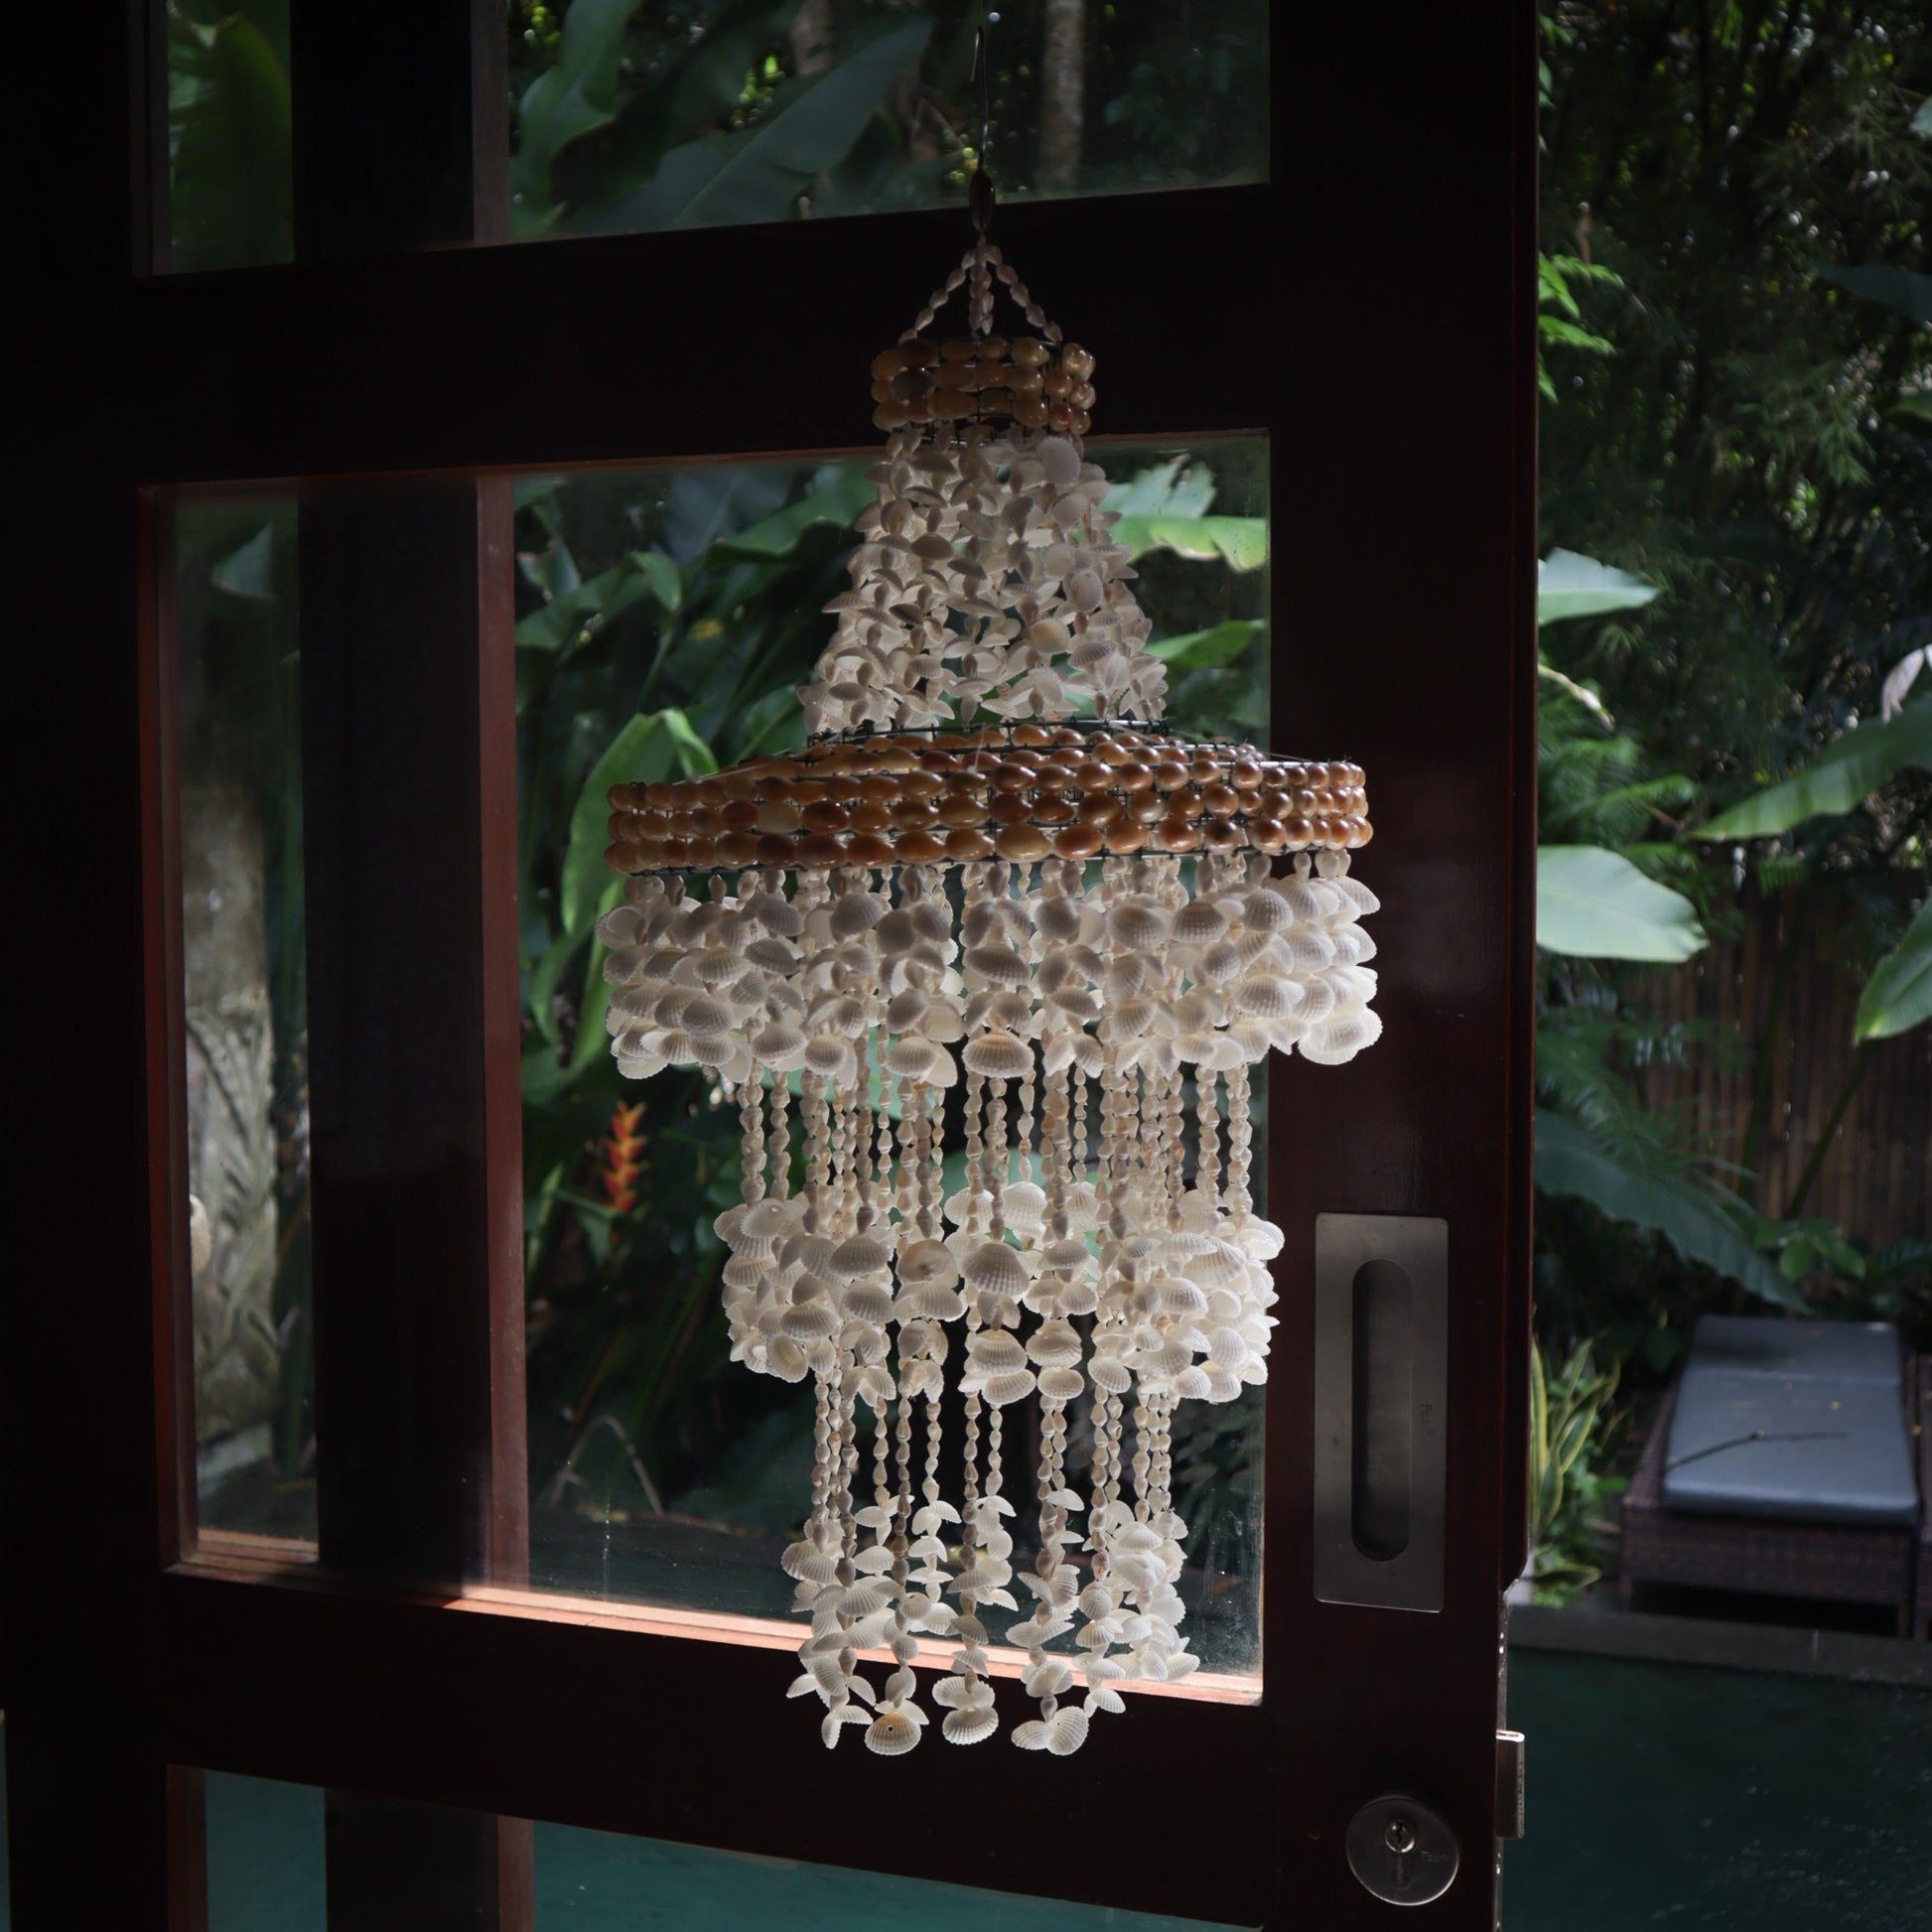 Seashell chandelier in the room